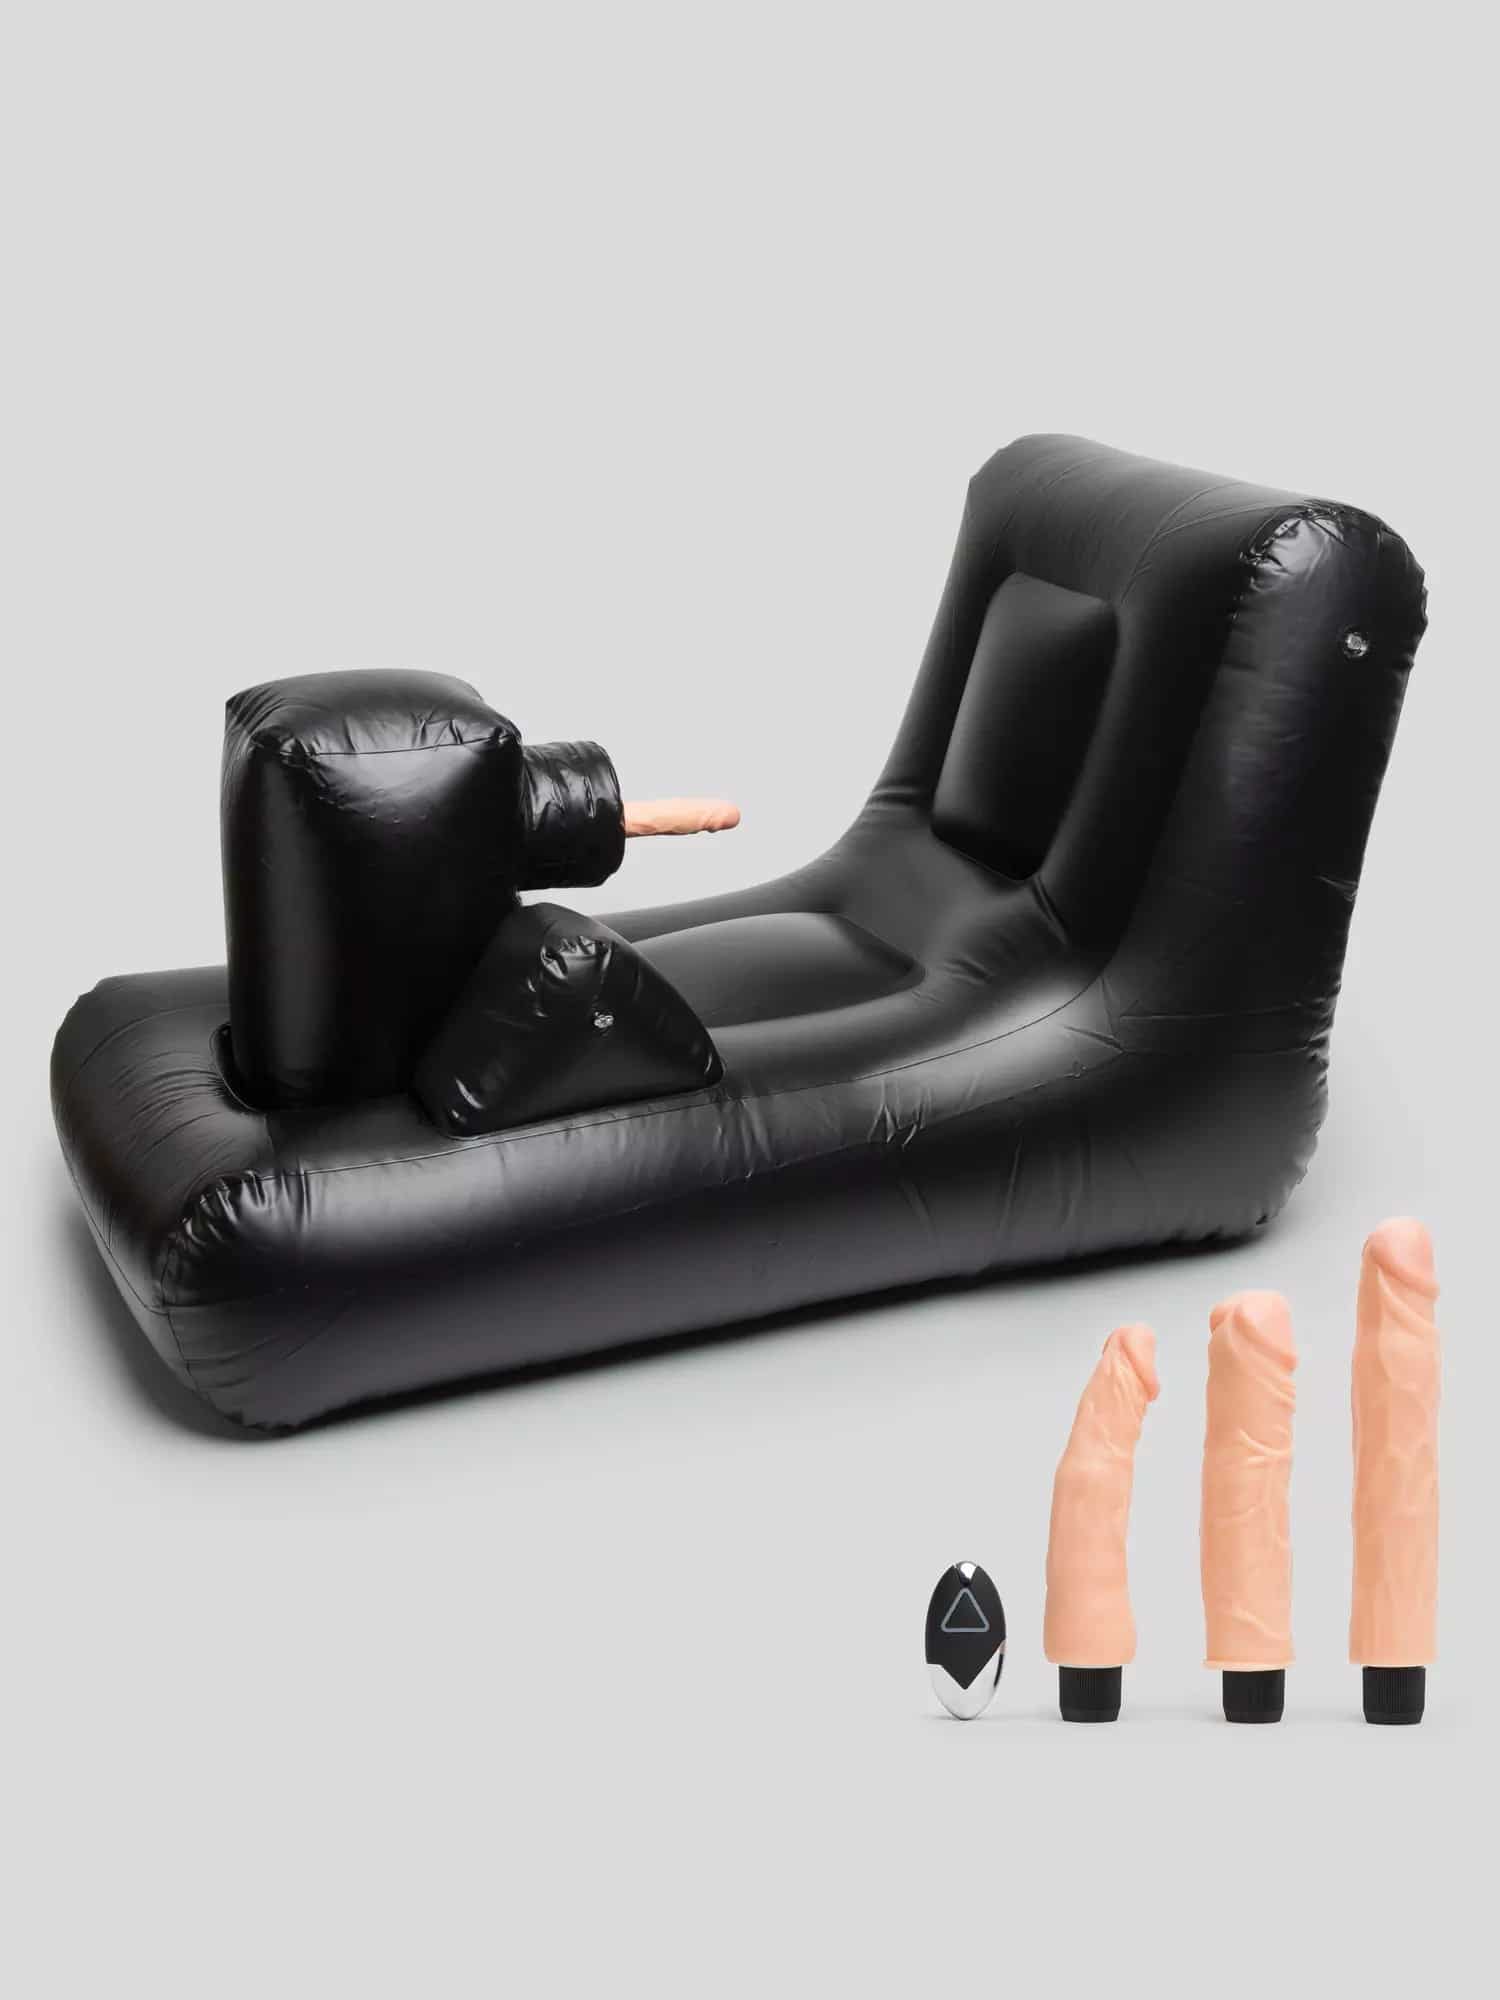 Compare Dark Magic Inflatable Sex Machine